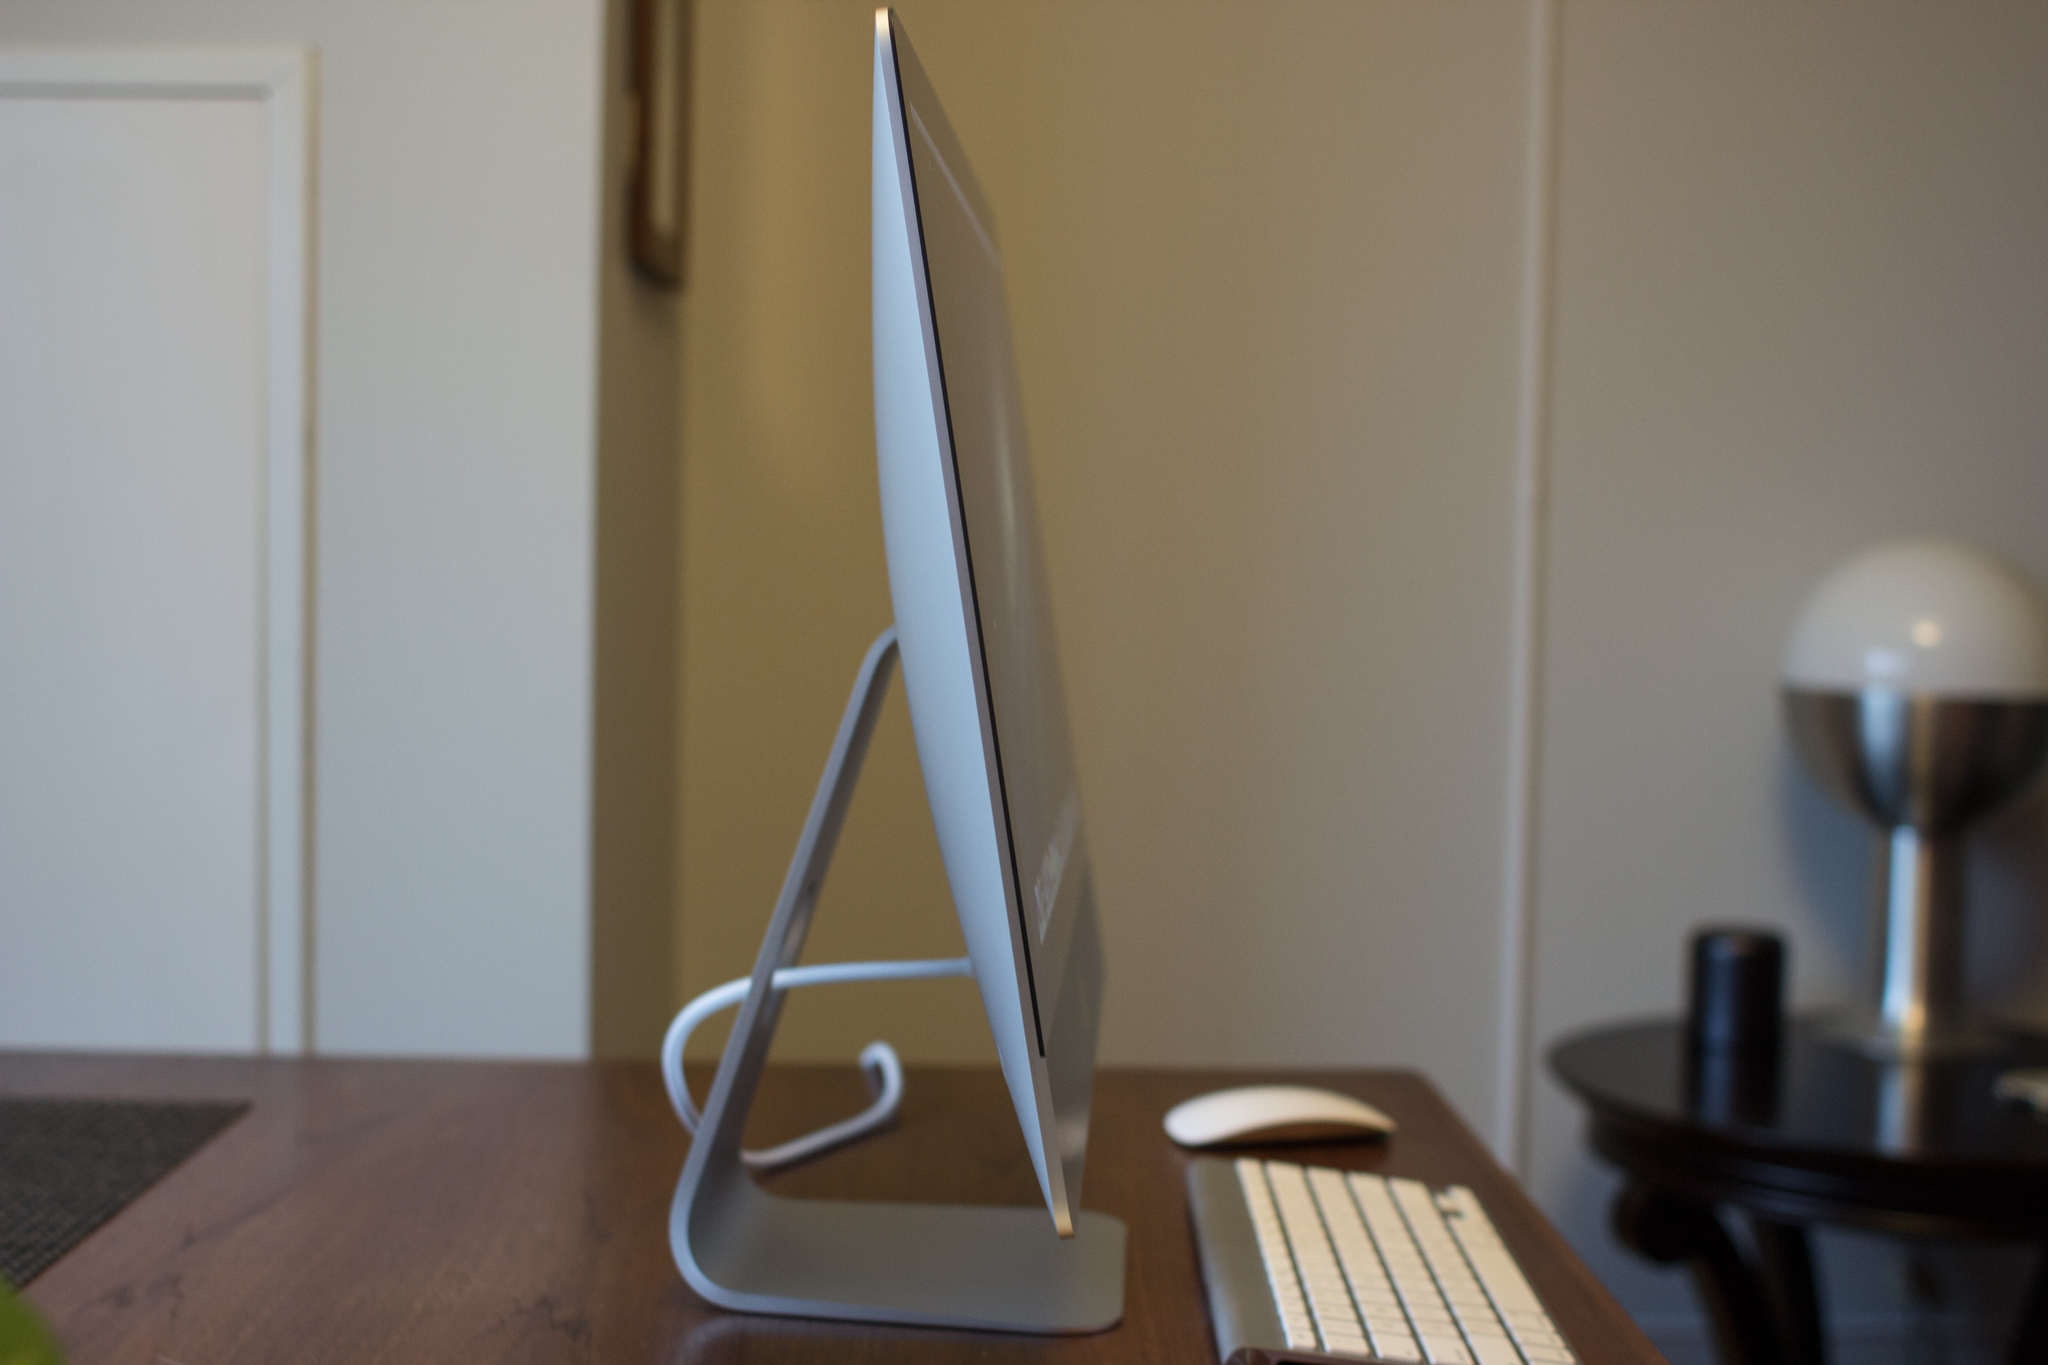 21.5-inch 2012 iMac, side view